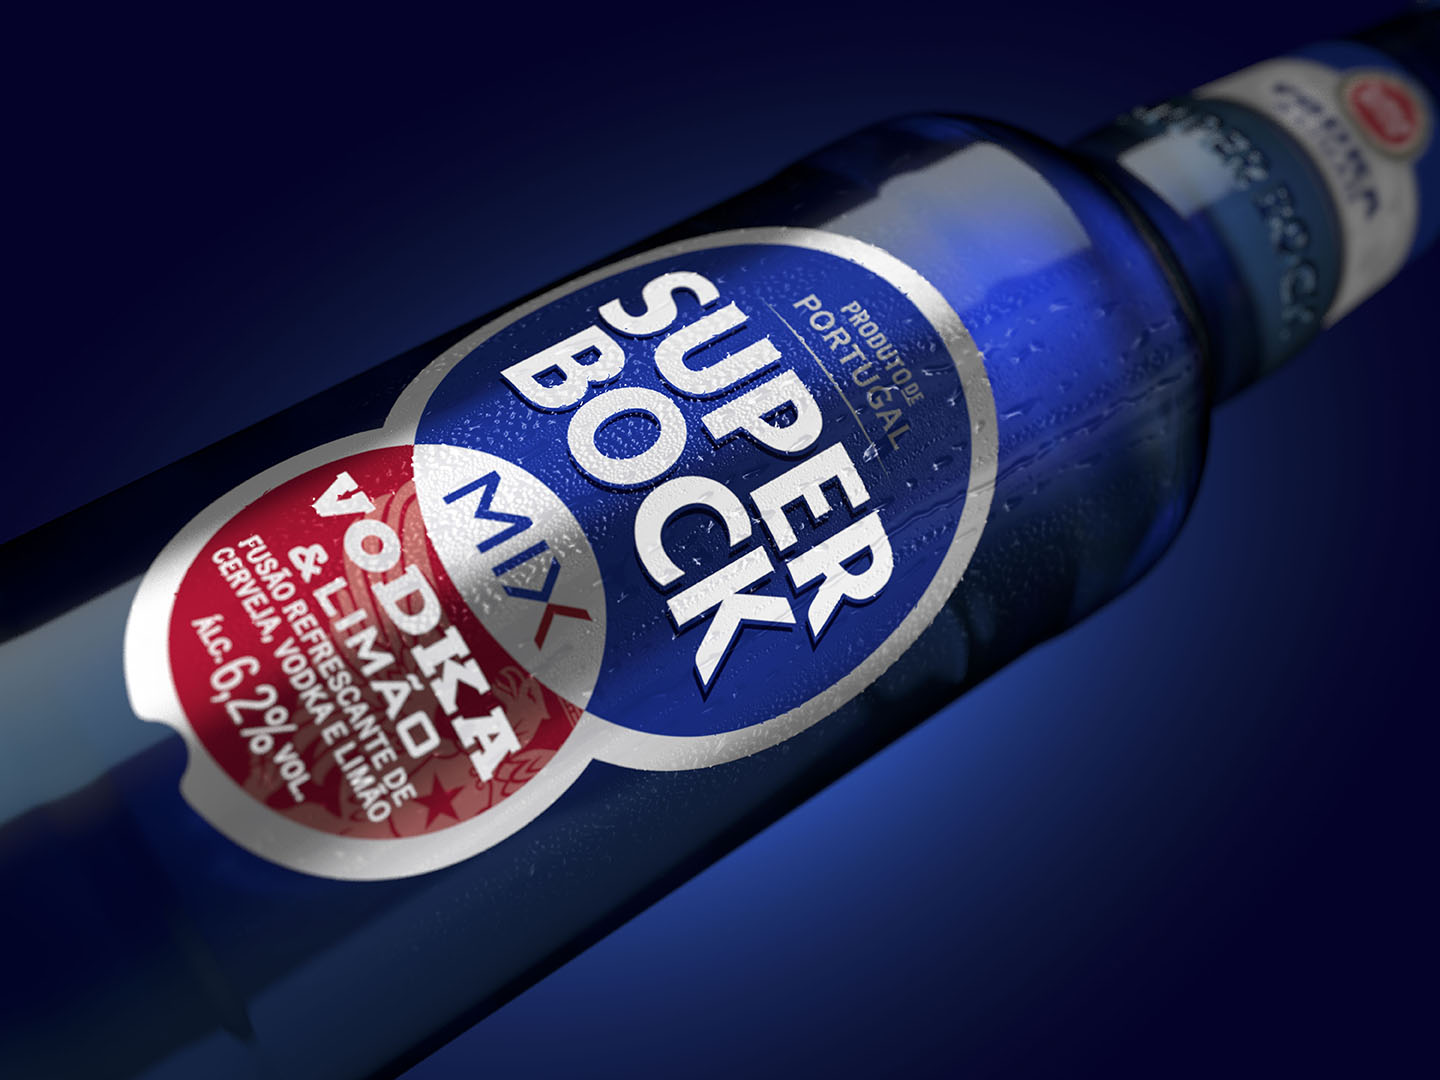 Pic.: Super Bock flavoured beers